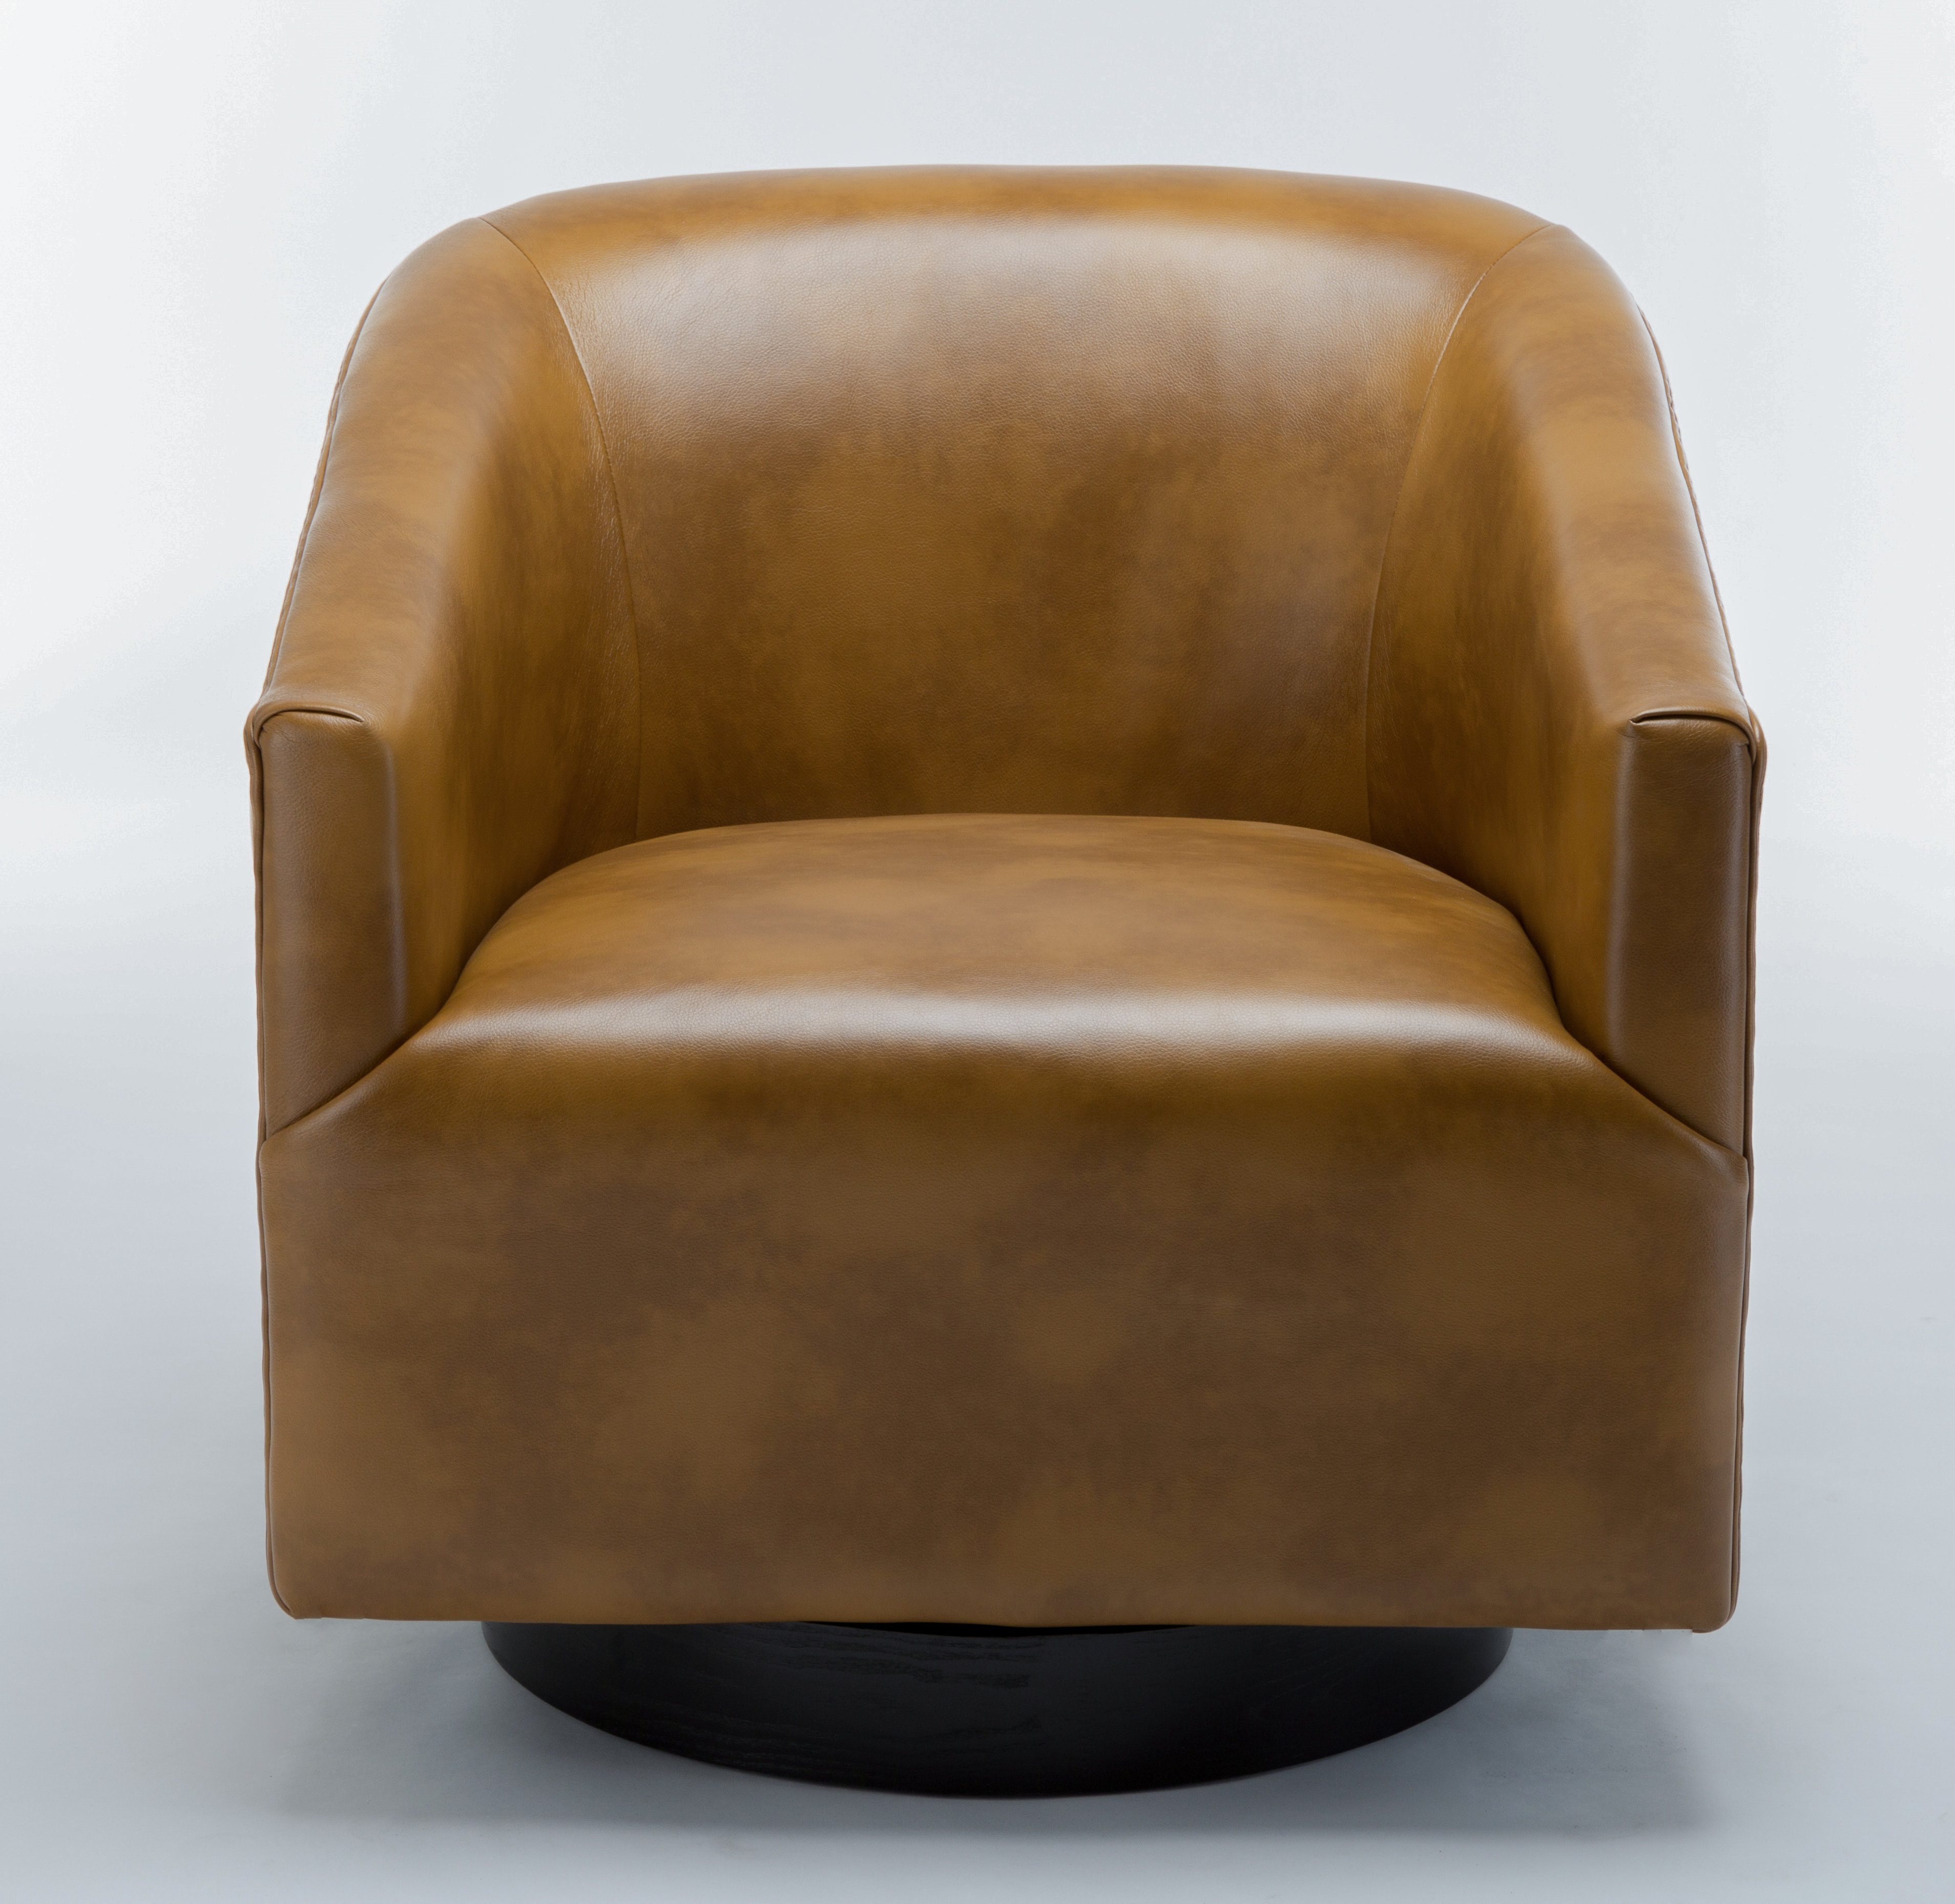 Mcintyre Swivel 22 75 W Barrel Chair Reviews Allmodern